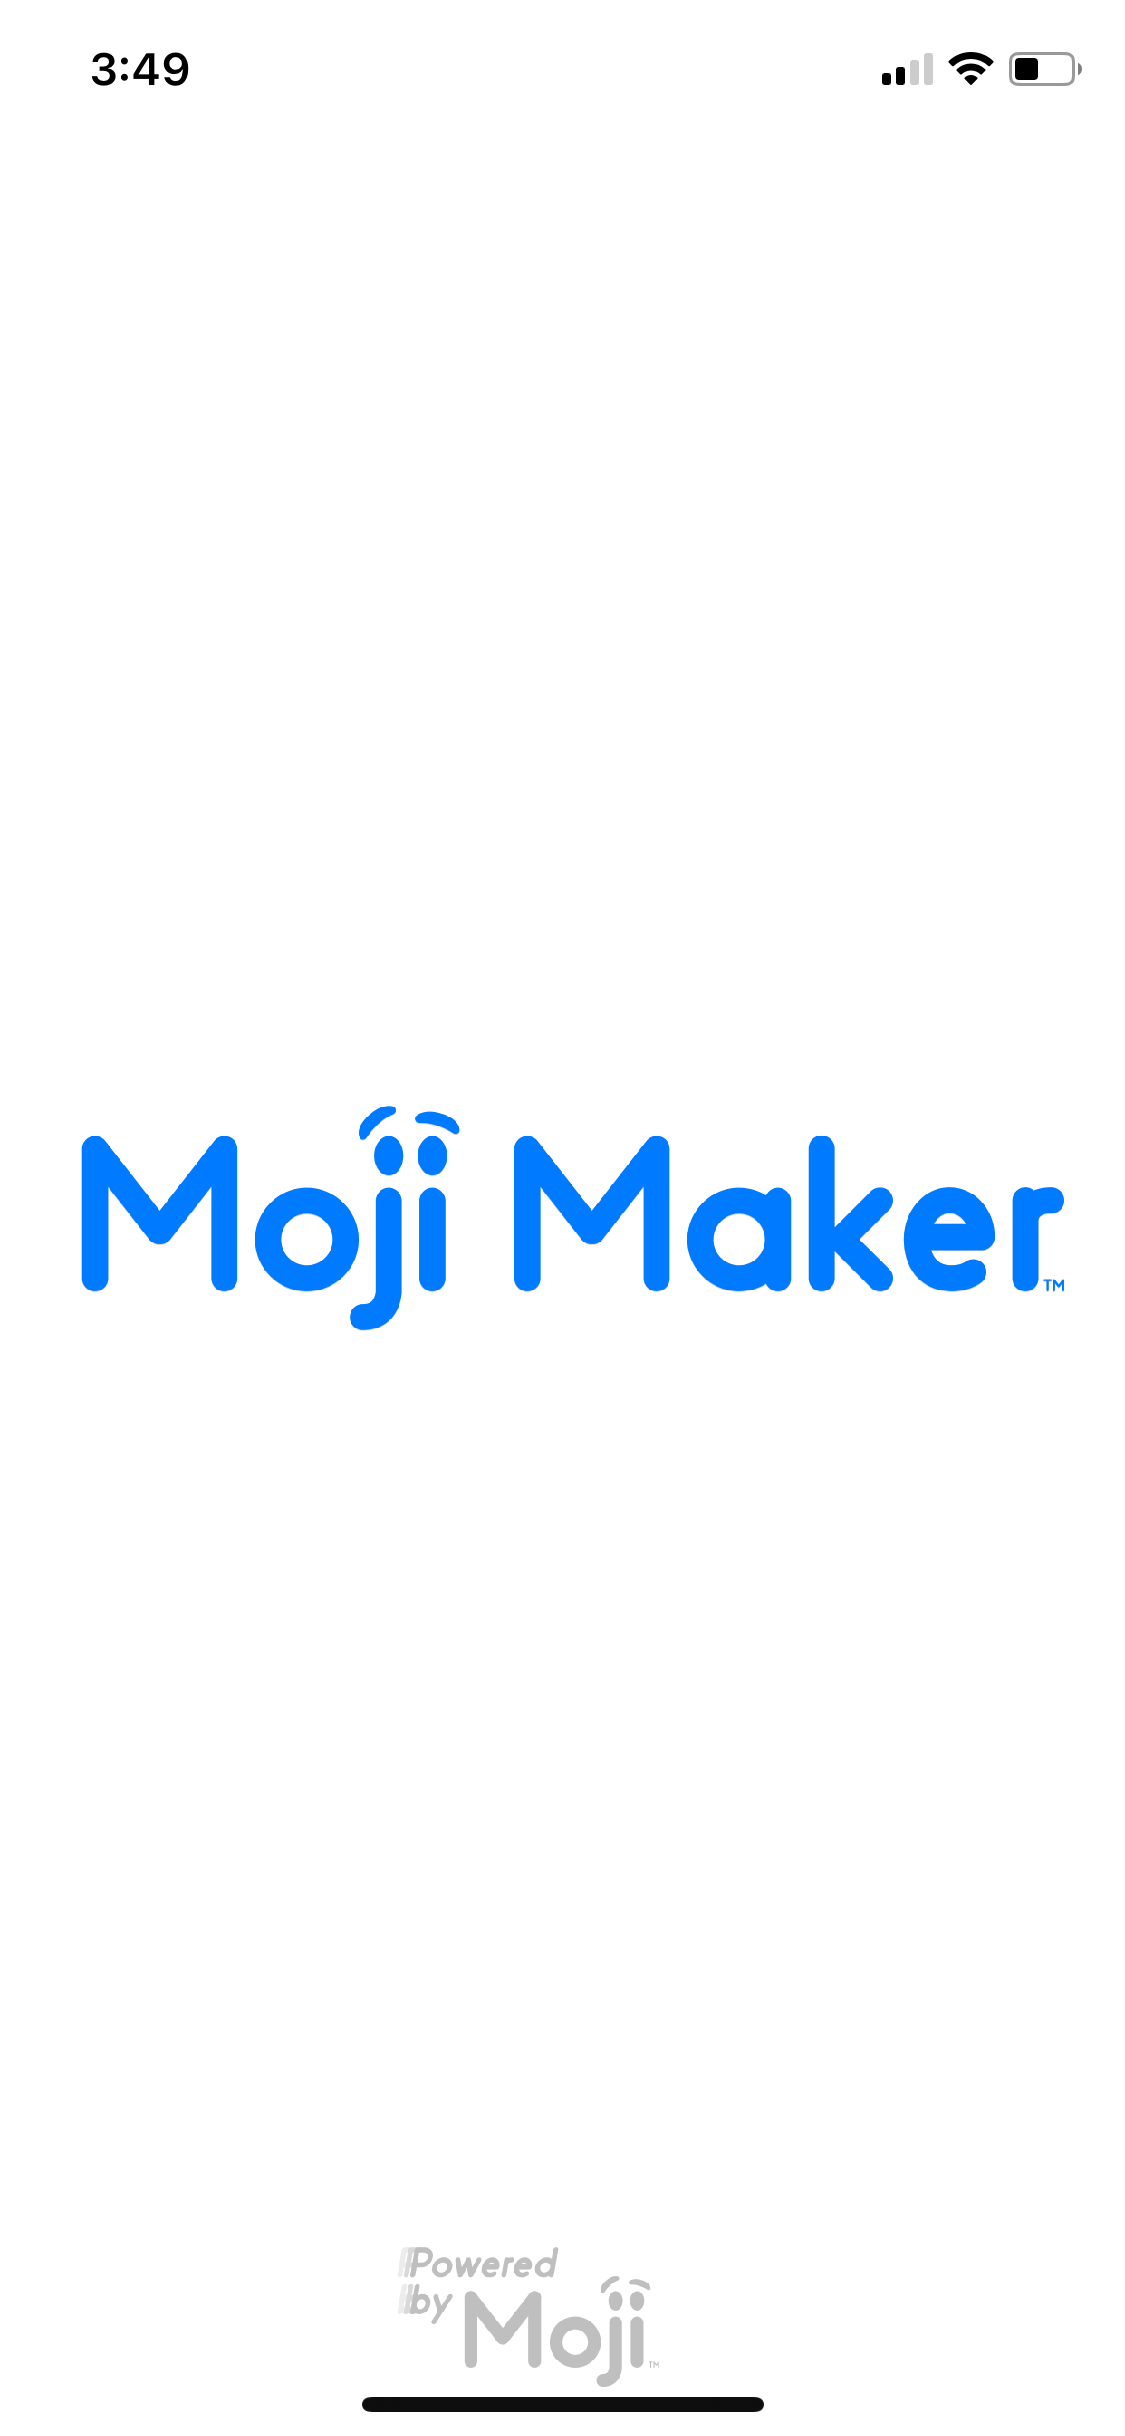 moji maker logo